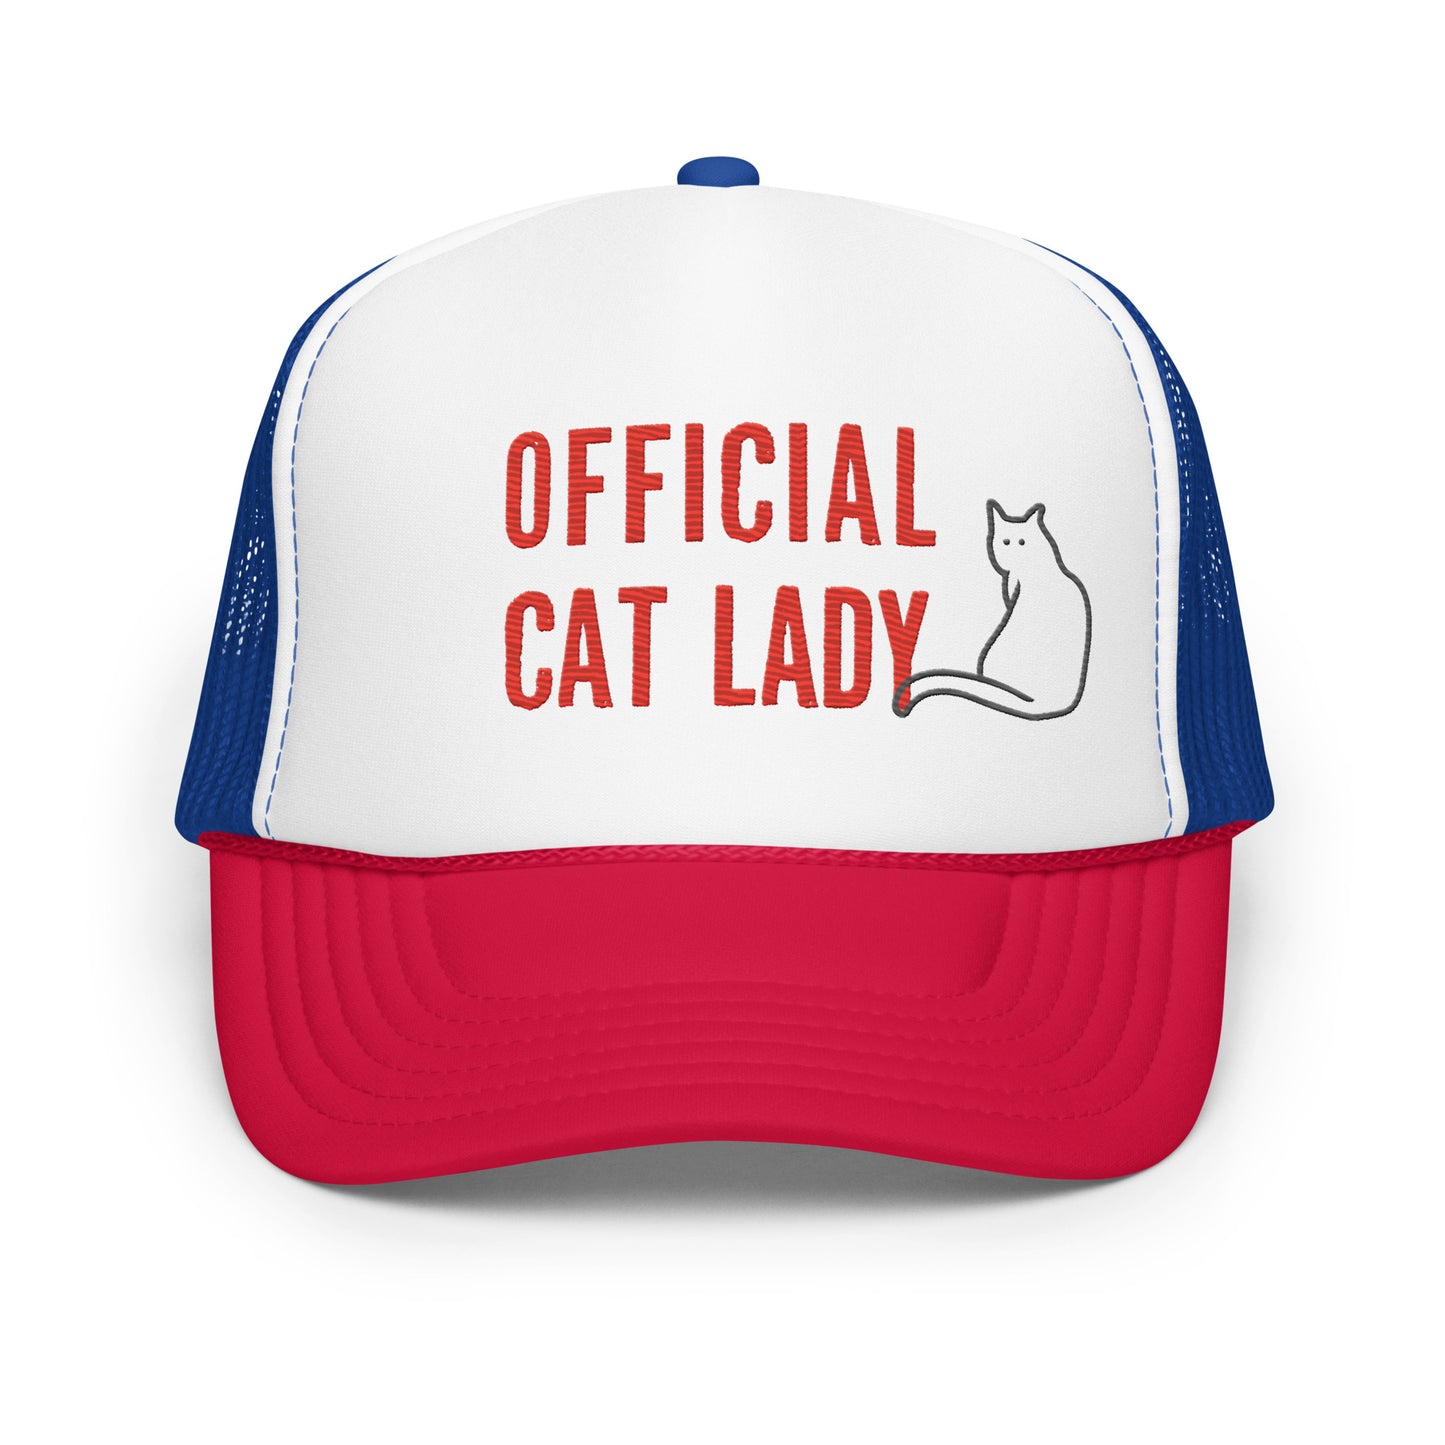 Original Official Cat Lady red design Foam Trucker Hat